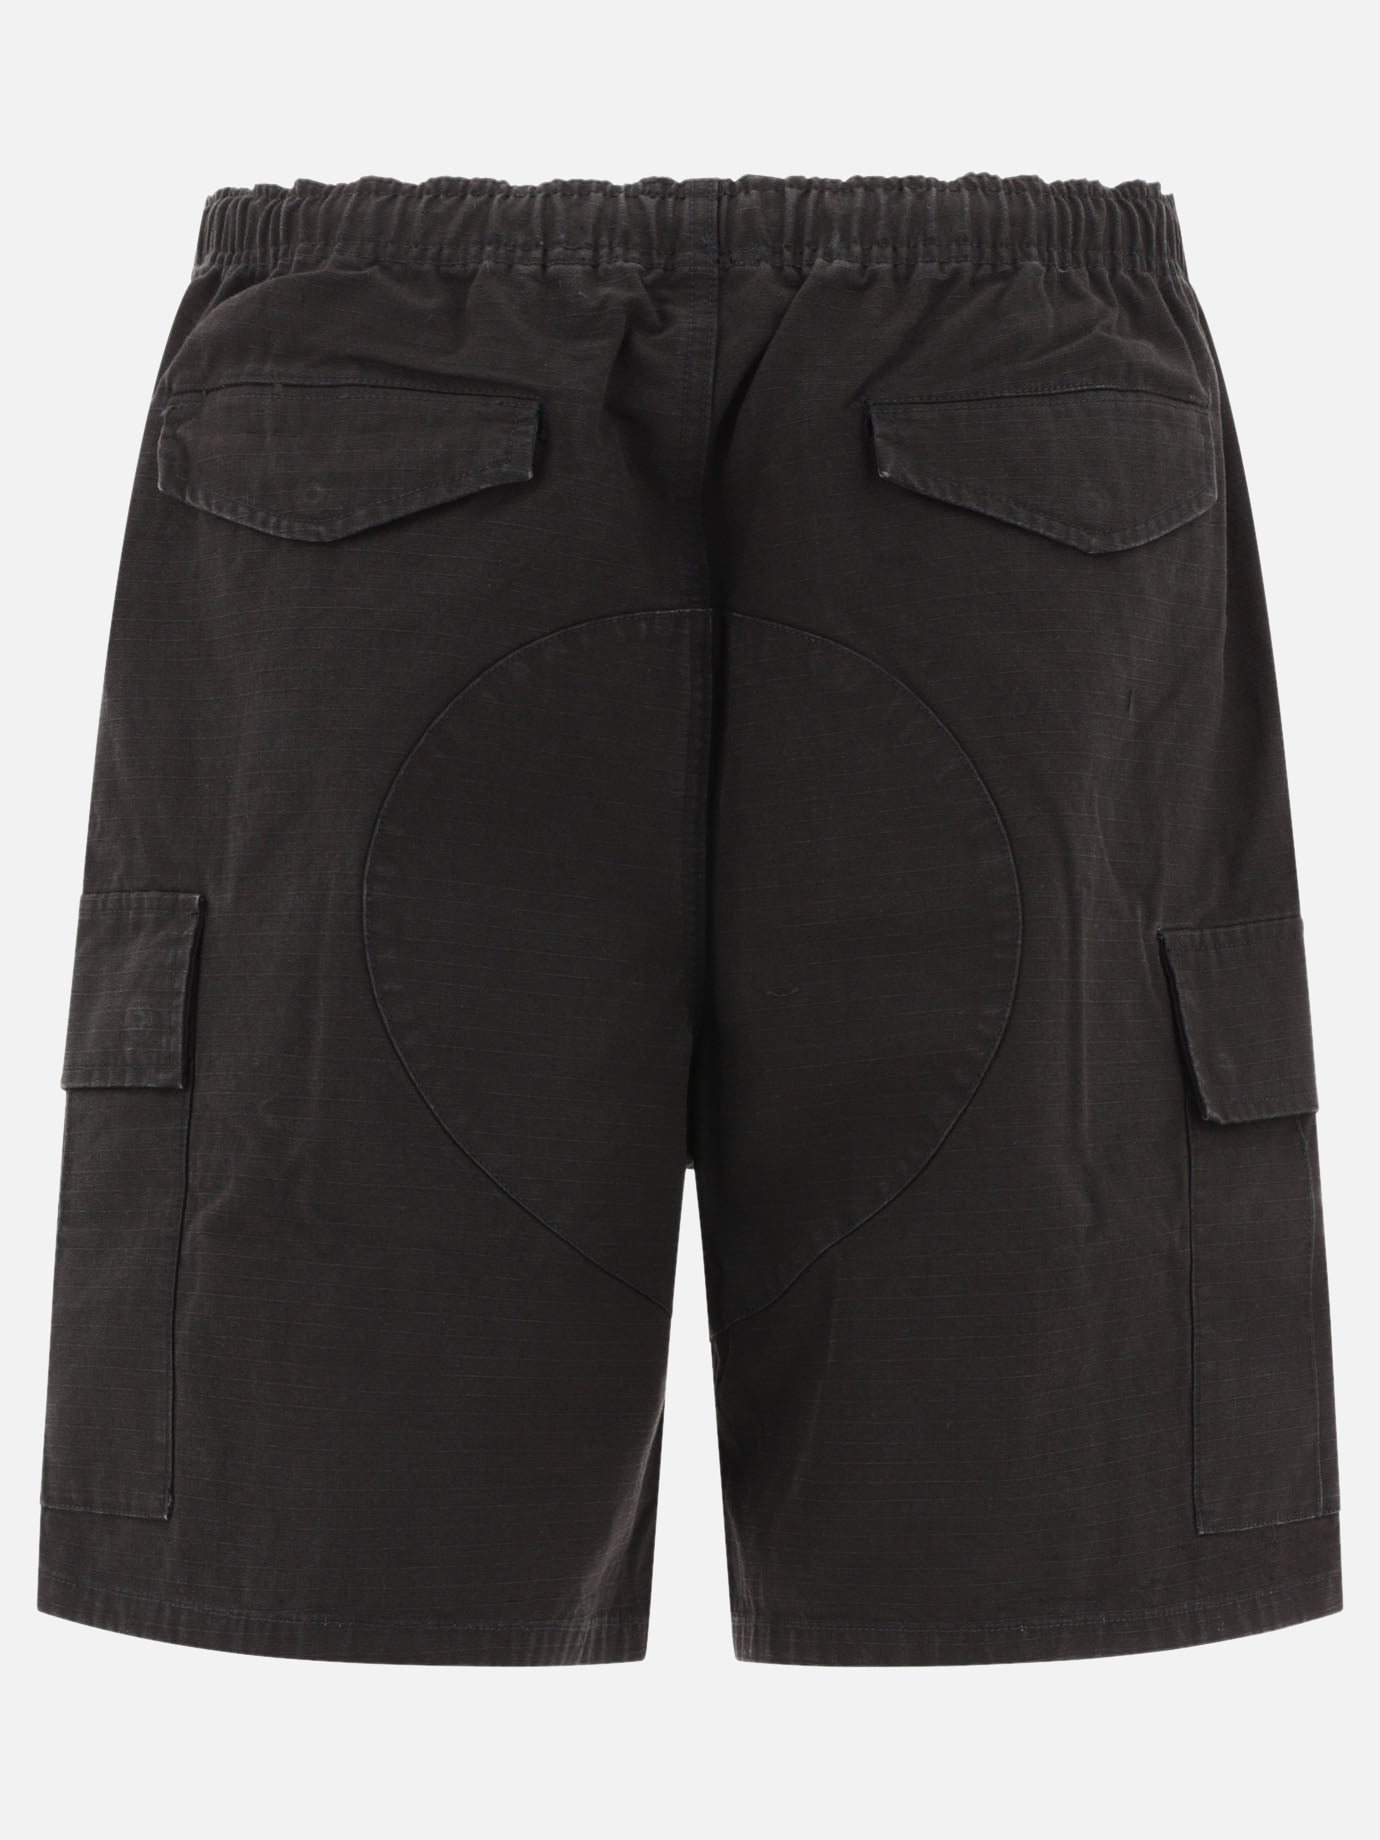 "Cargo Beach" shorts